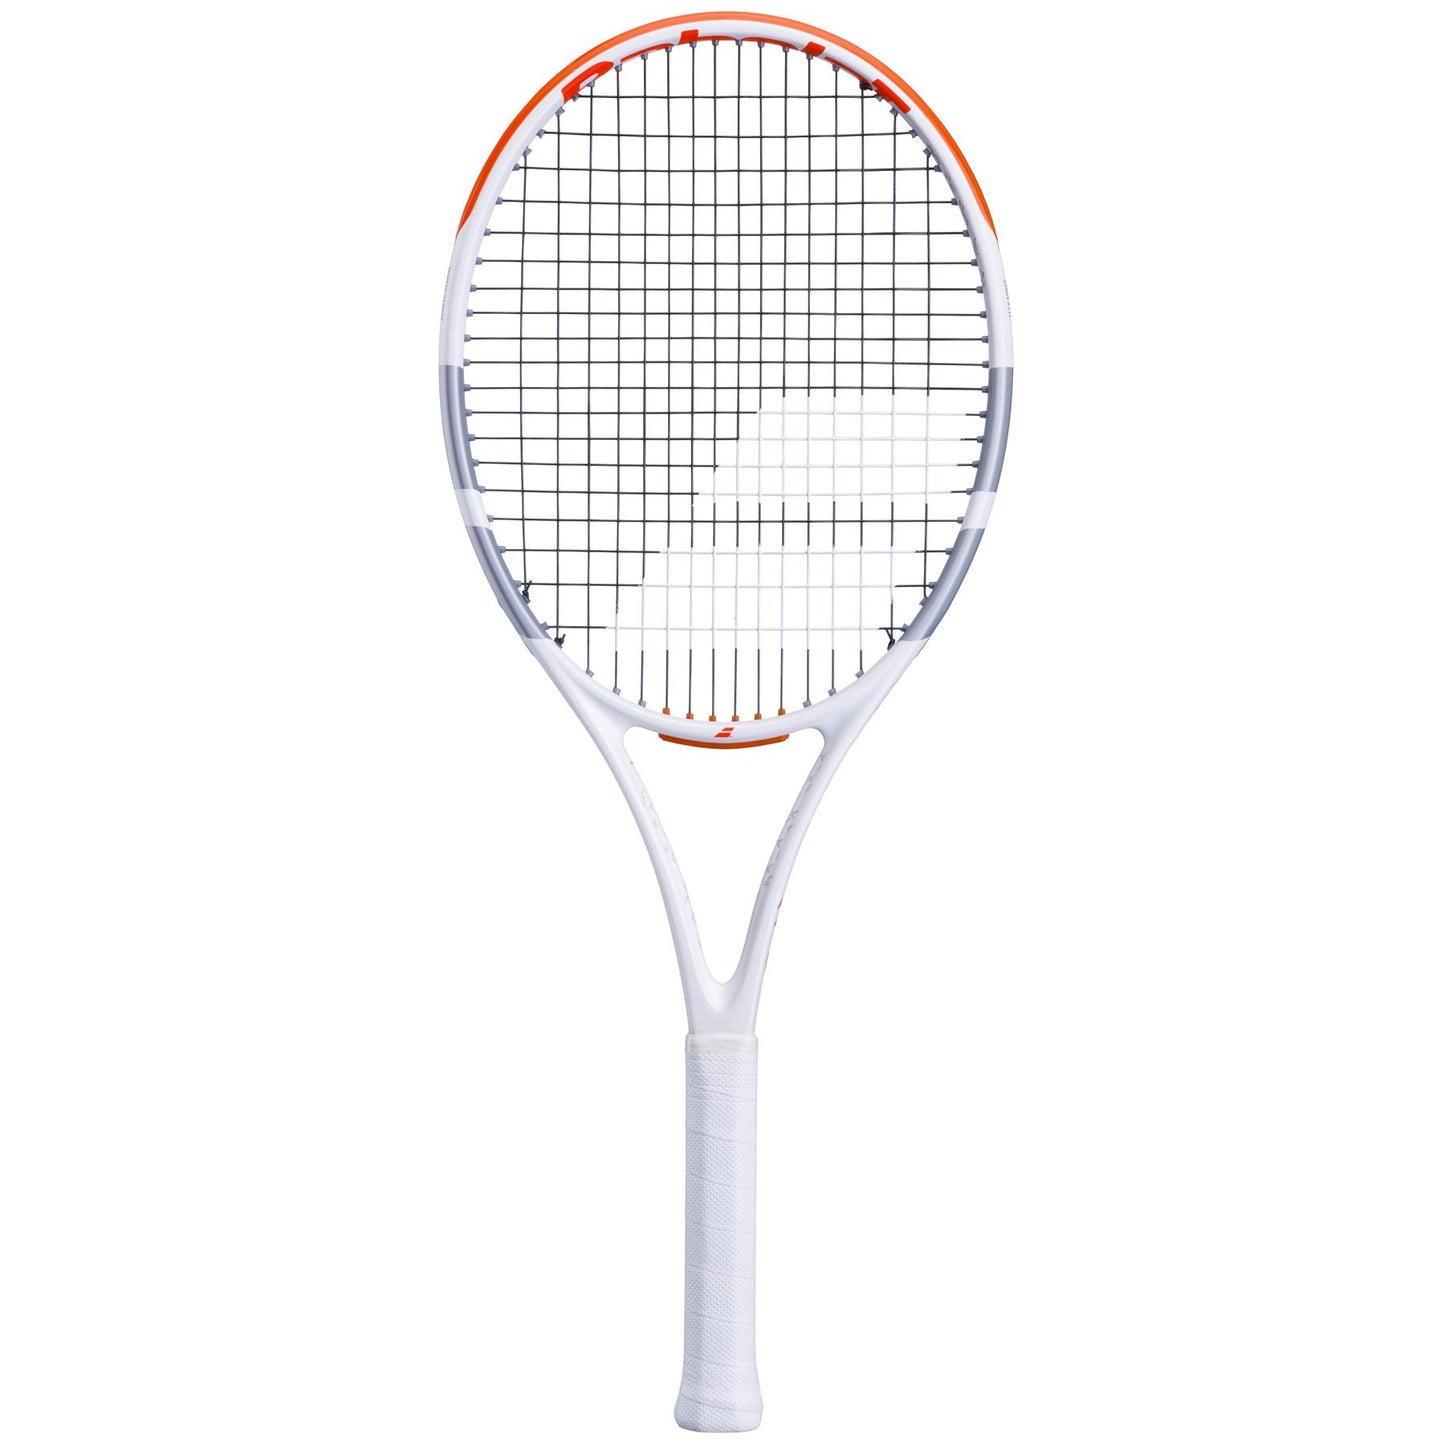 Babolat Evo Strike Gen 2 Tennis Racket - White / Red / Grey (Strung)